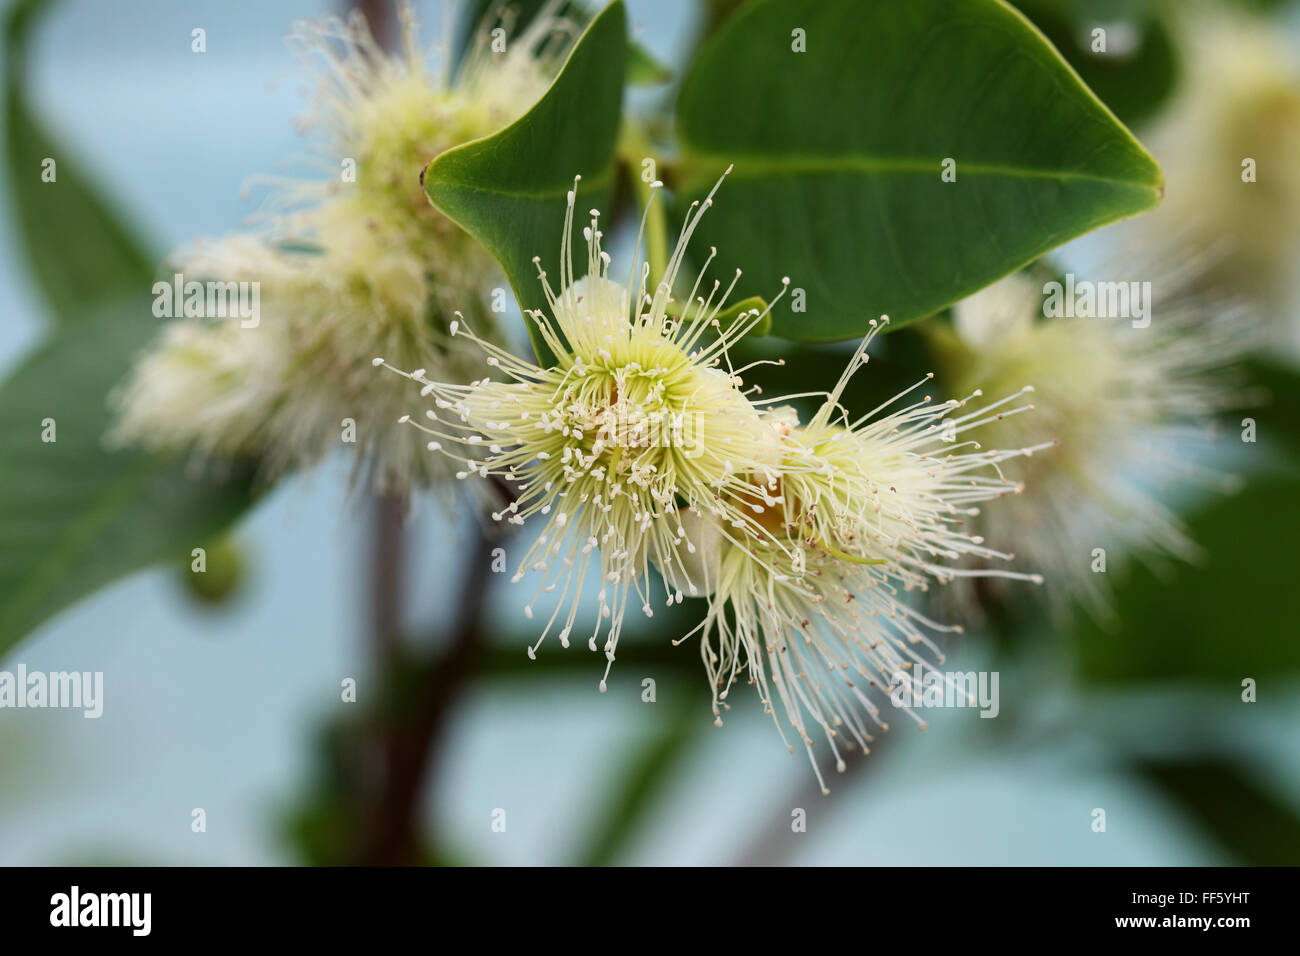 Syzygium samarangense or known as Wax Jambu flower Stock Photo - Alamy